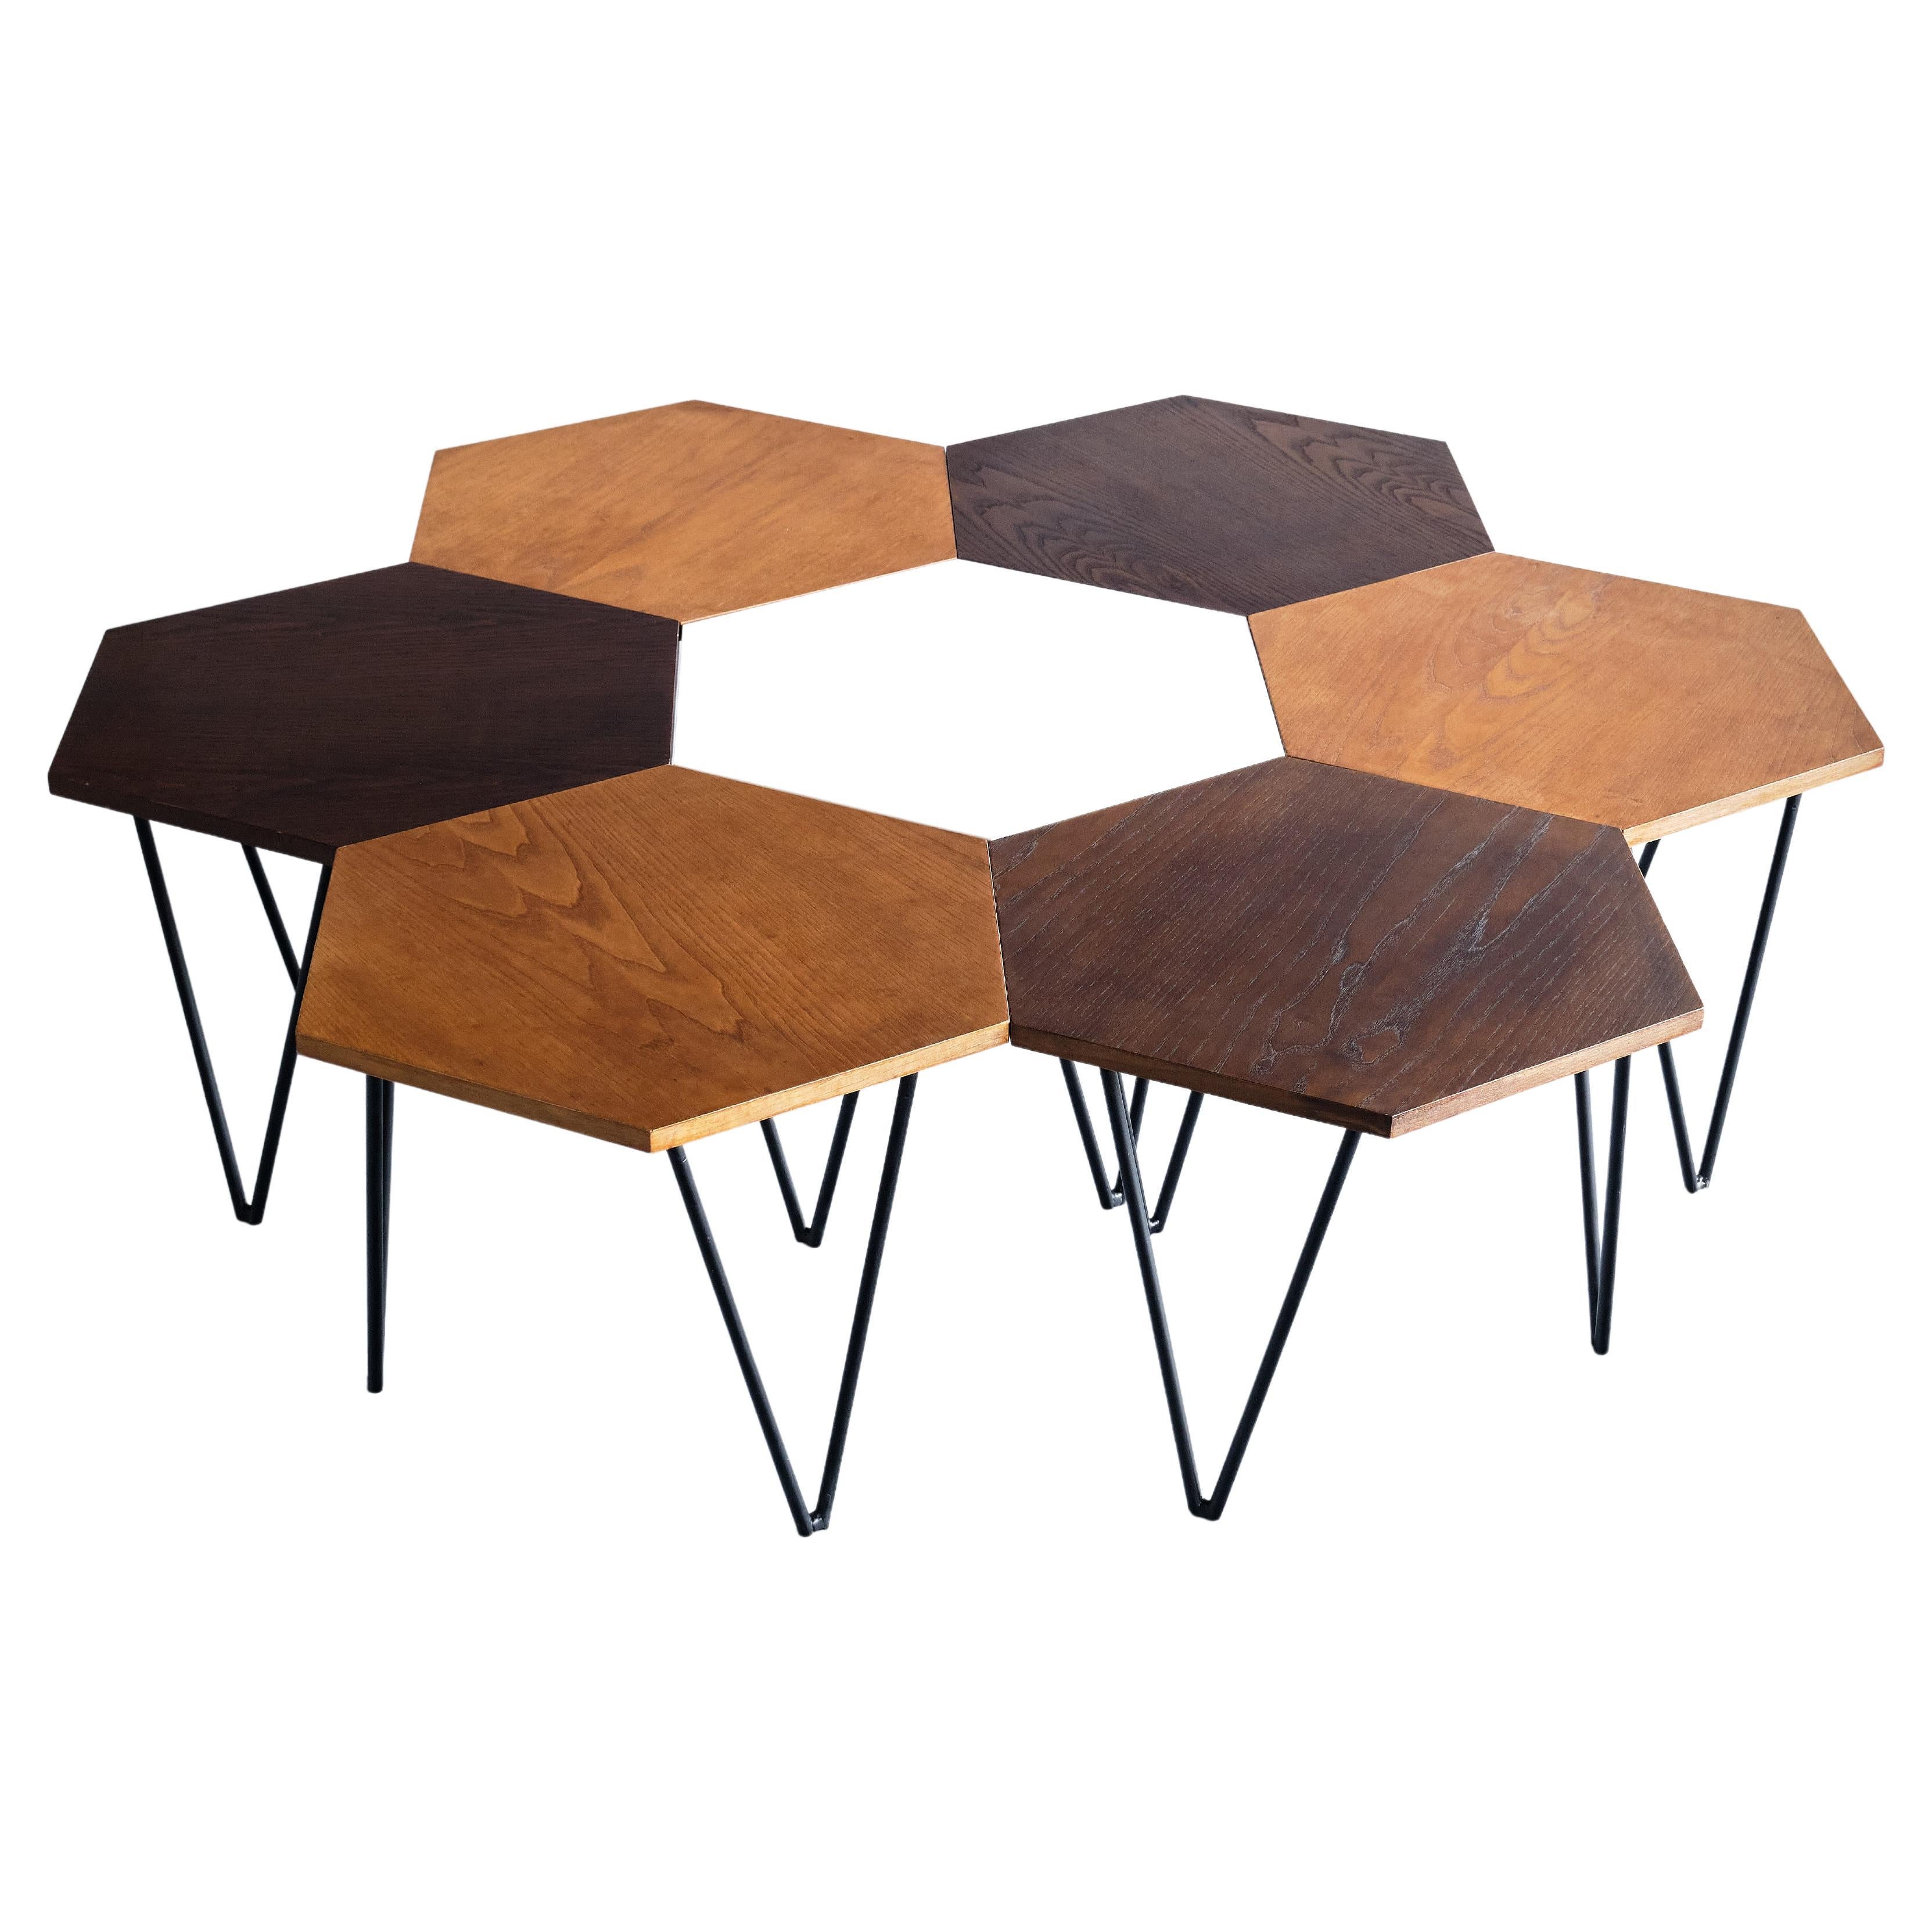 Ensemble de 7 tables basses modulaires hexagonales Gio Ponti, ISA Bergamo, Italie, années 1950